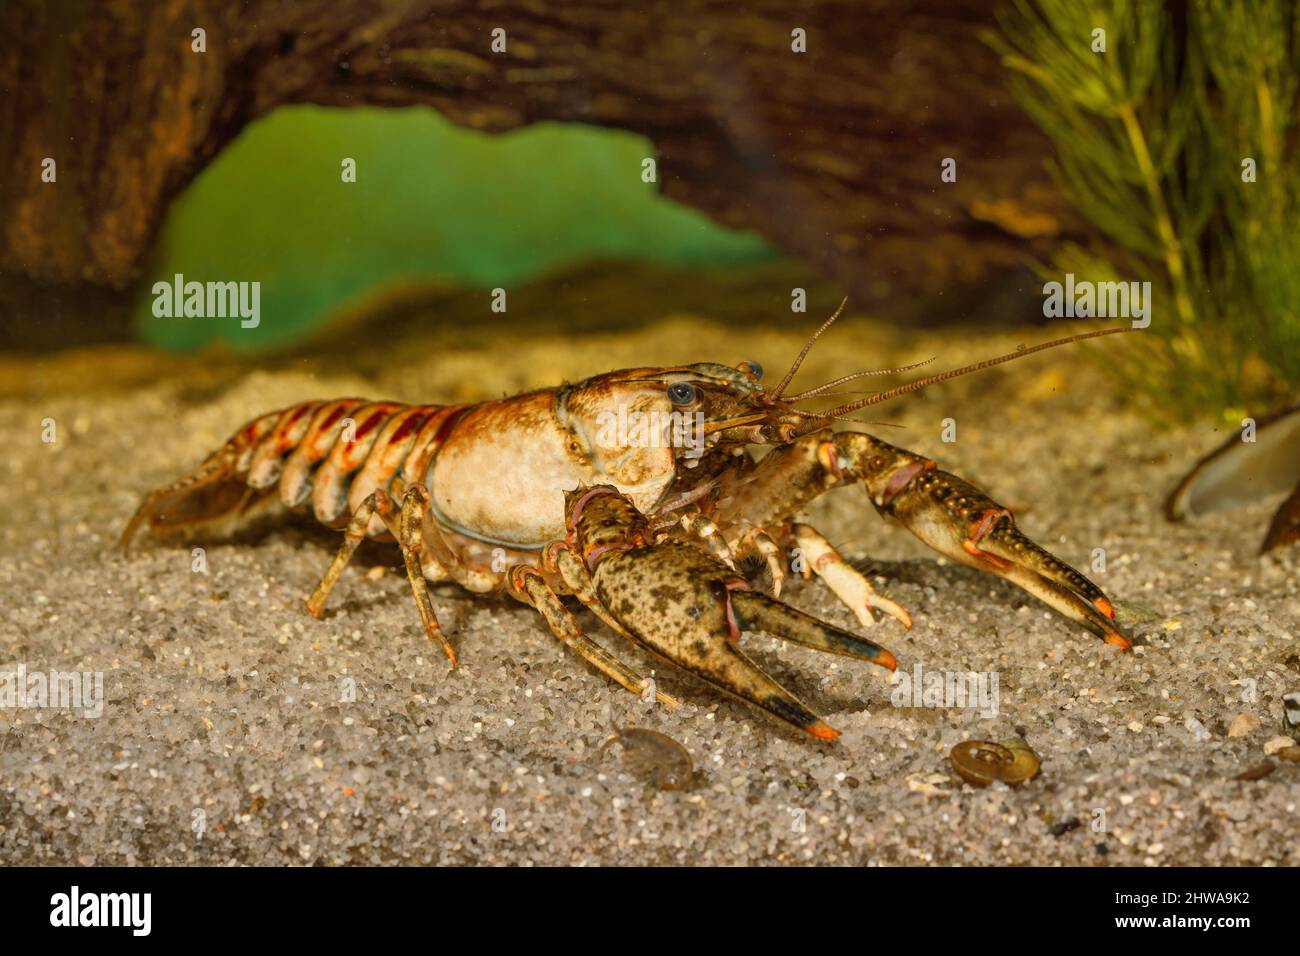 Spinycheek crayfish, American crayfish, American river crayfish, Striped crayfish (Orconectes limosus, Cambarus affinis), on sandy ground, Germany, Stock Photo